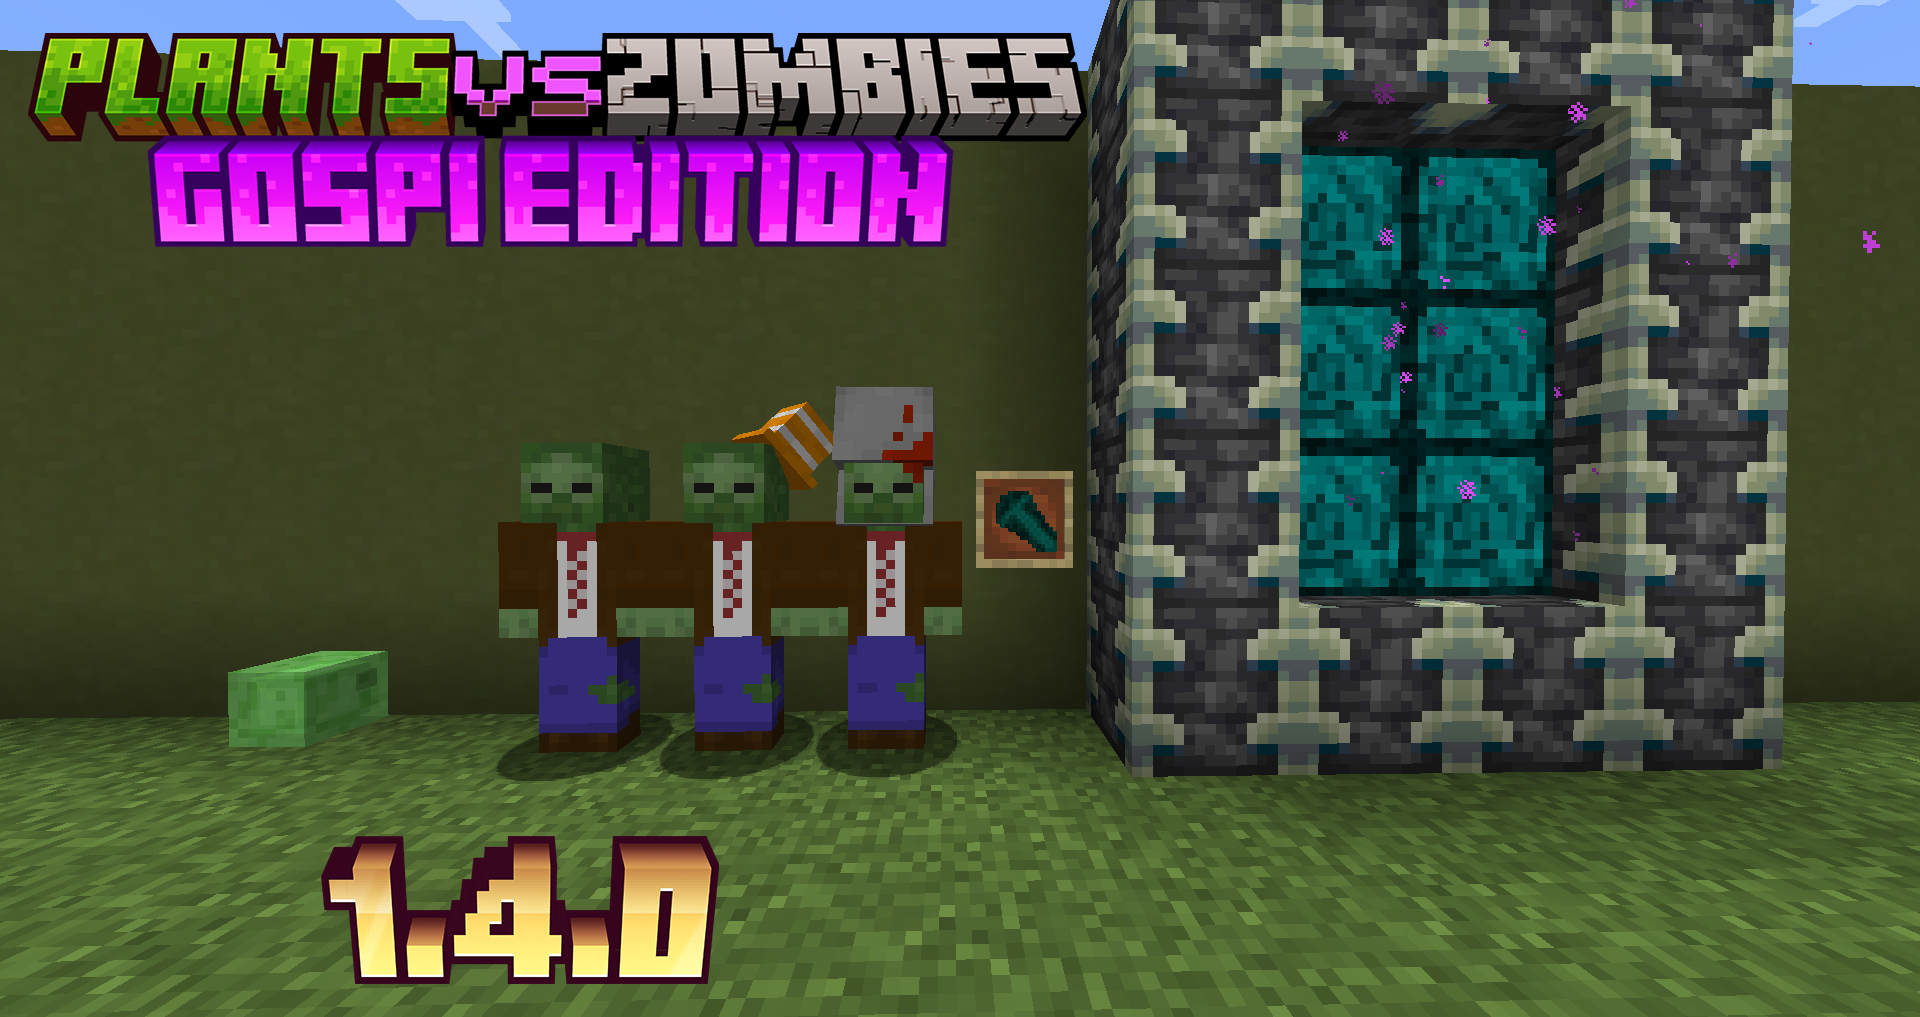 Plants vs Zombies: Gospi Edition  version 1.4.0